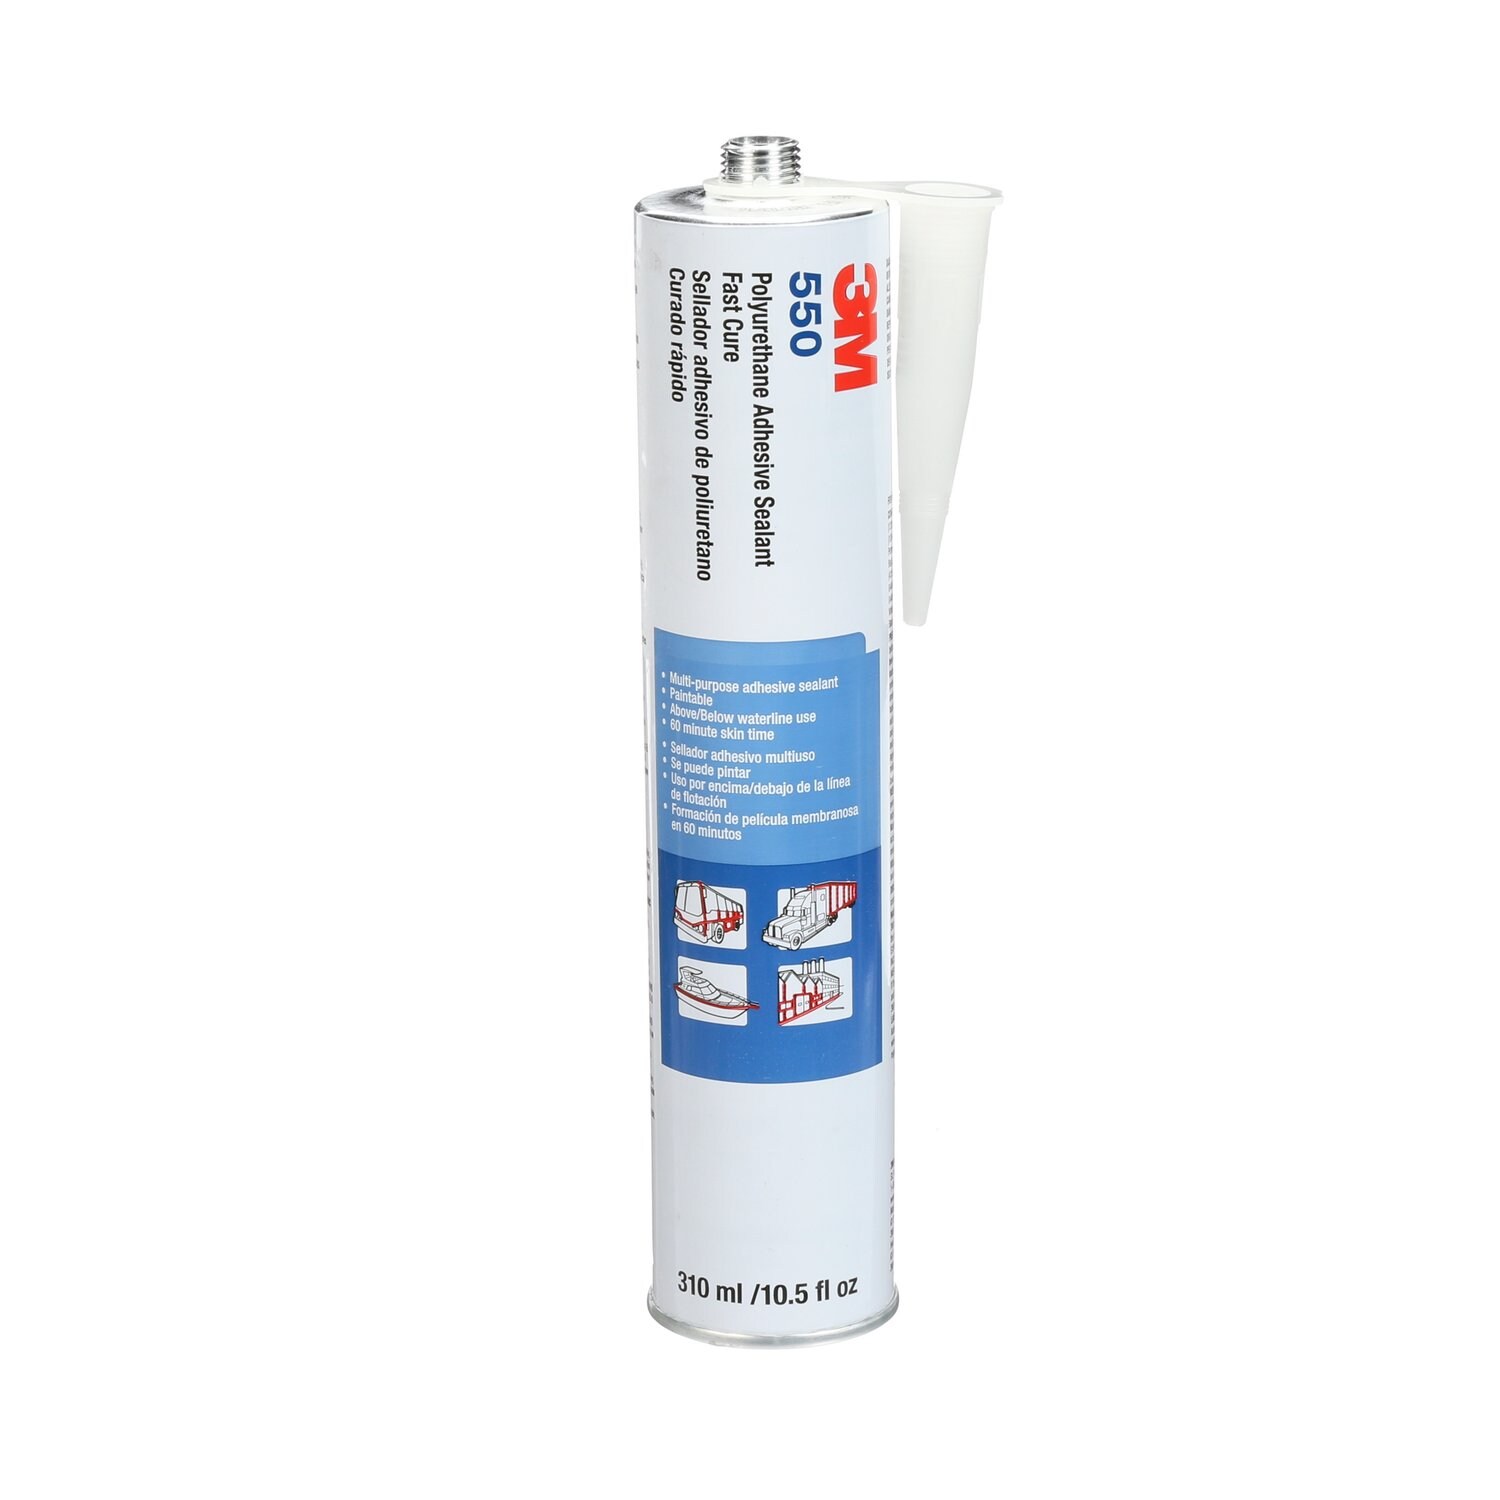 7000121486 - 3M Polyurethane Adhesive Sealant 550FC Fast Cure, Gray, 310 mL
Cartridge, 12/Case